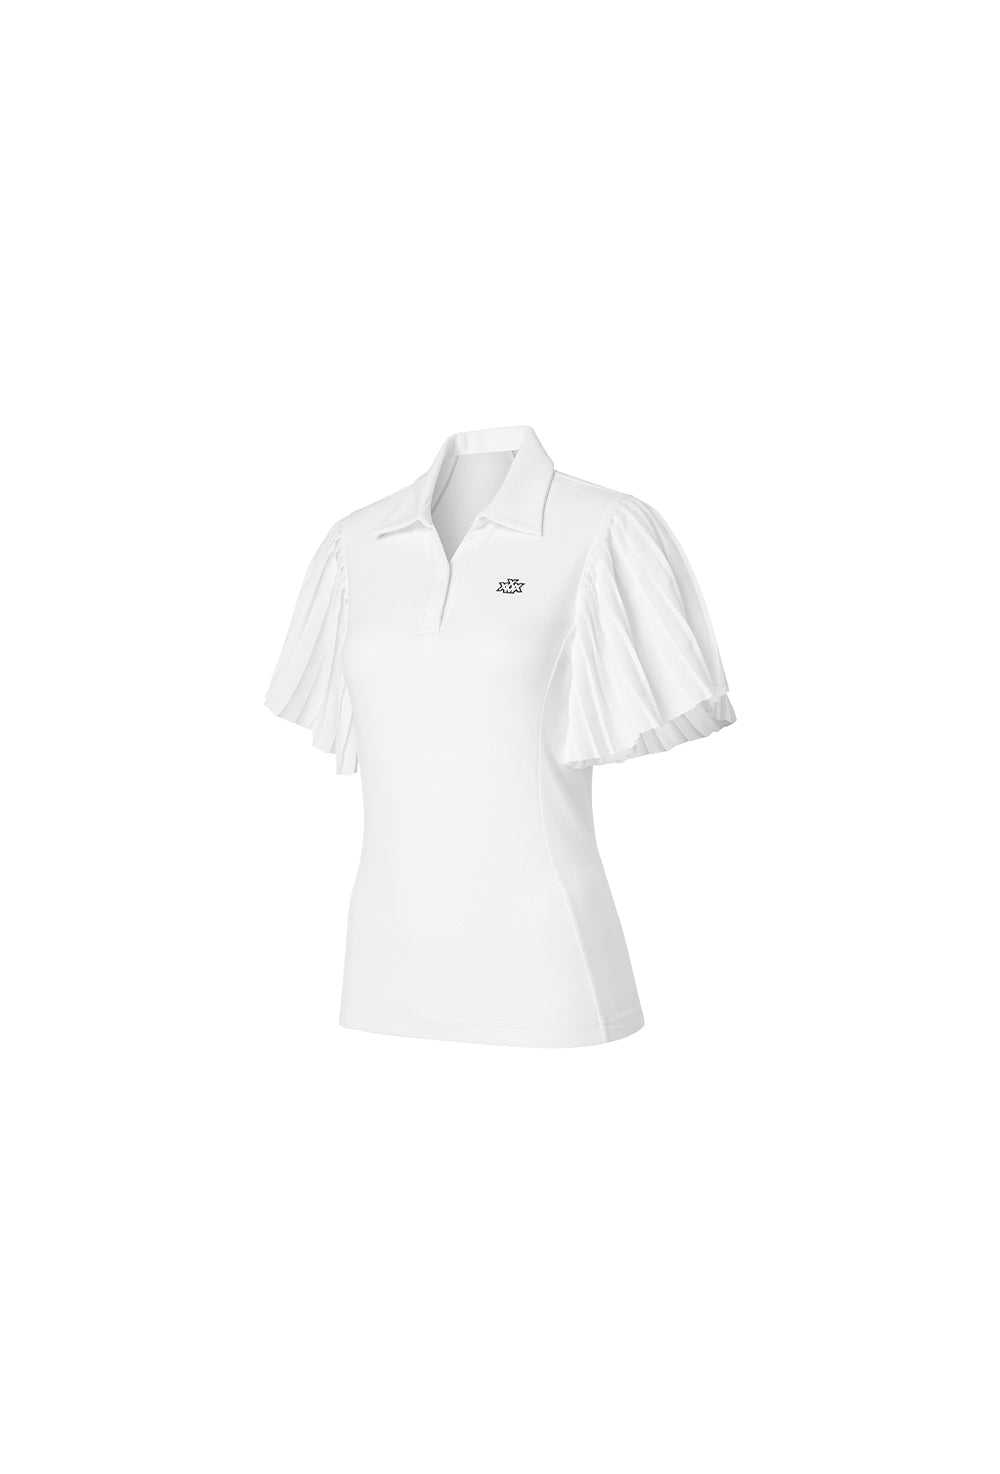 Pleated Polo Short Sleeve - White